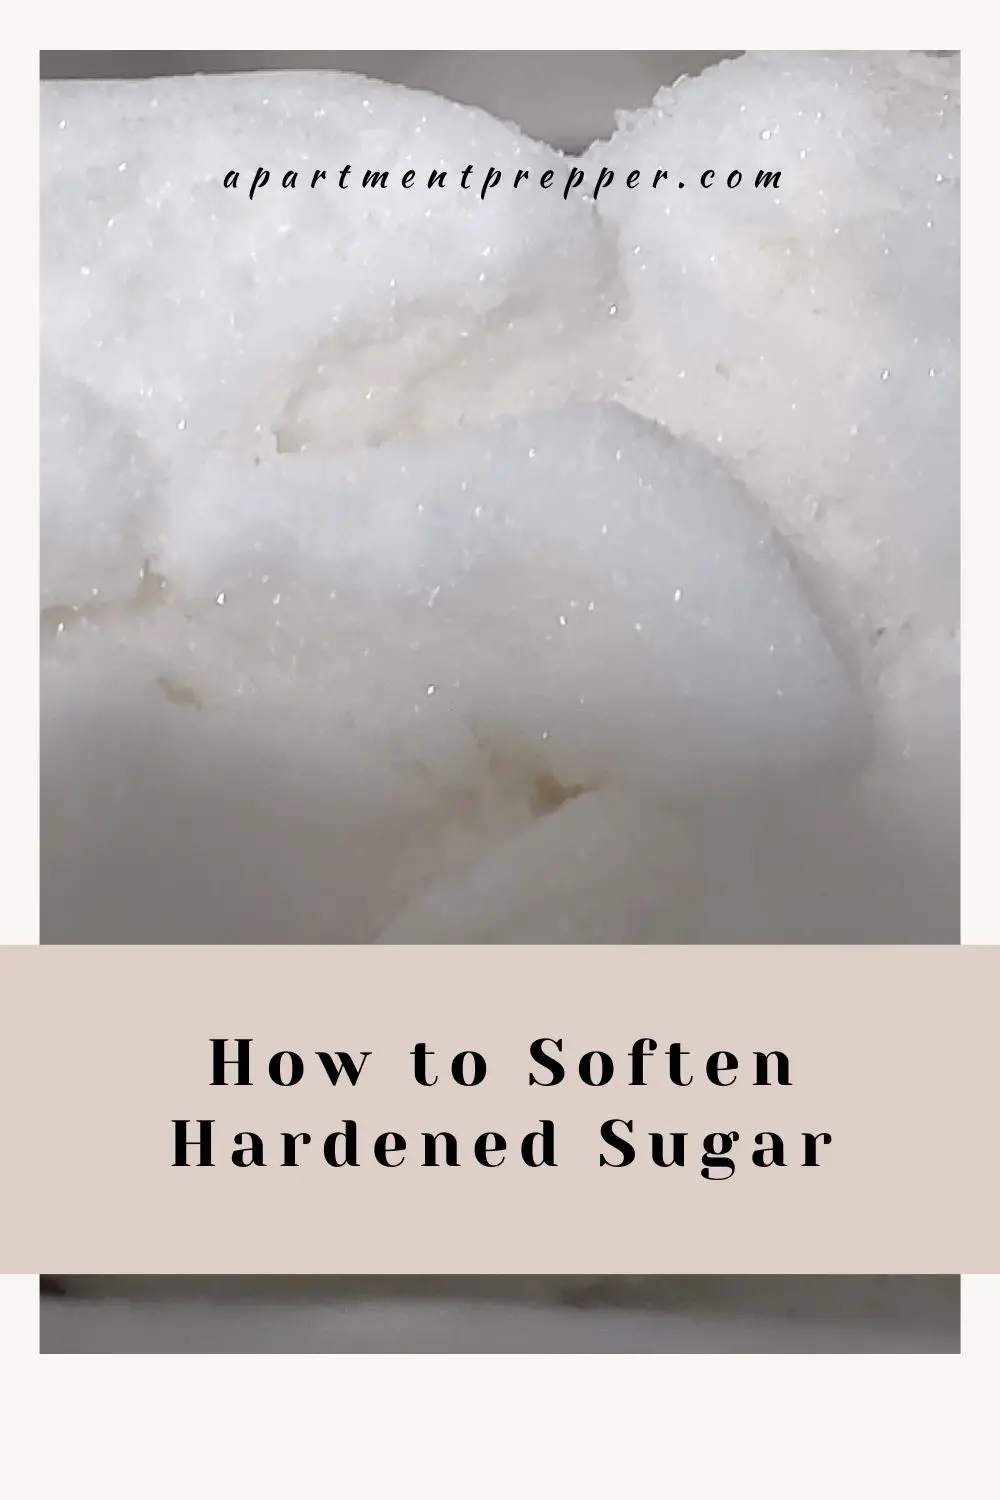 Hardened sugar